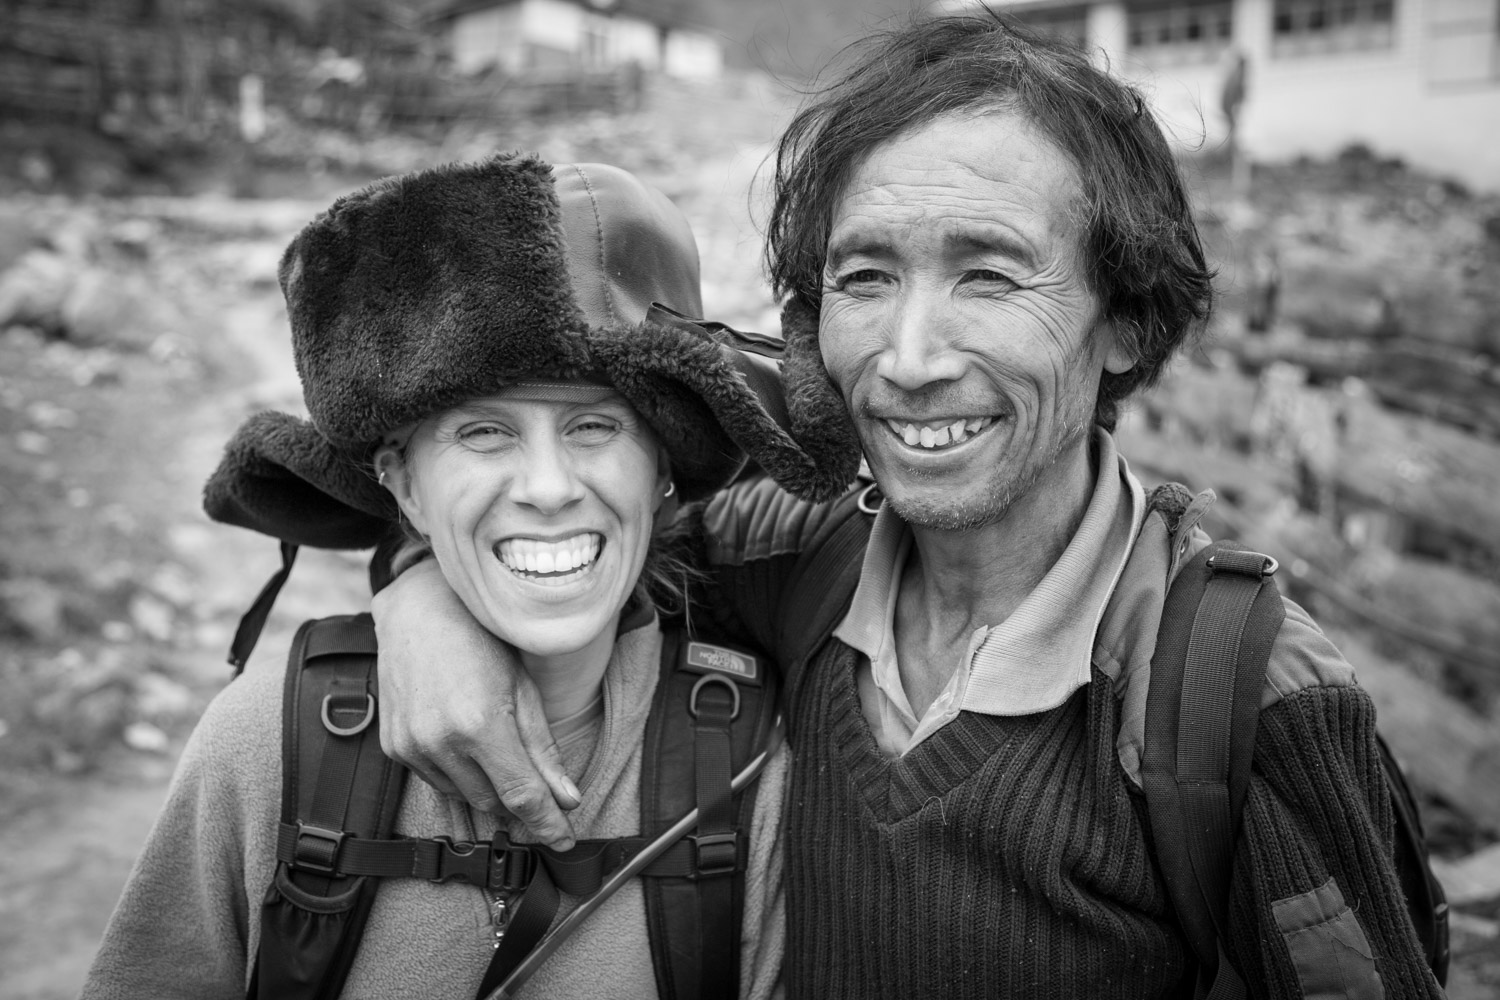  Friendly Stranger in Nepal 